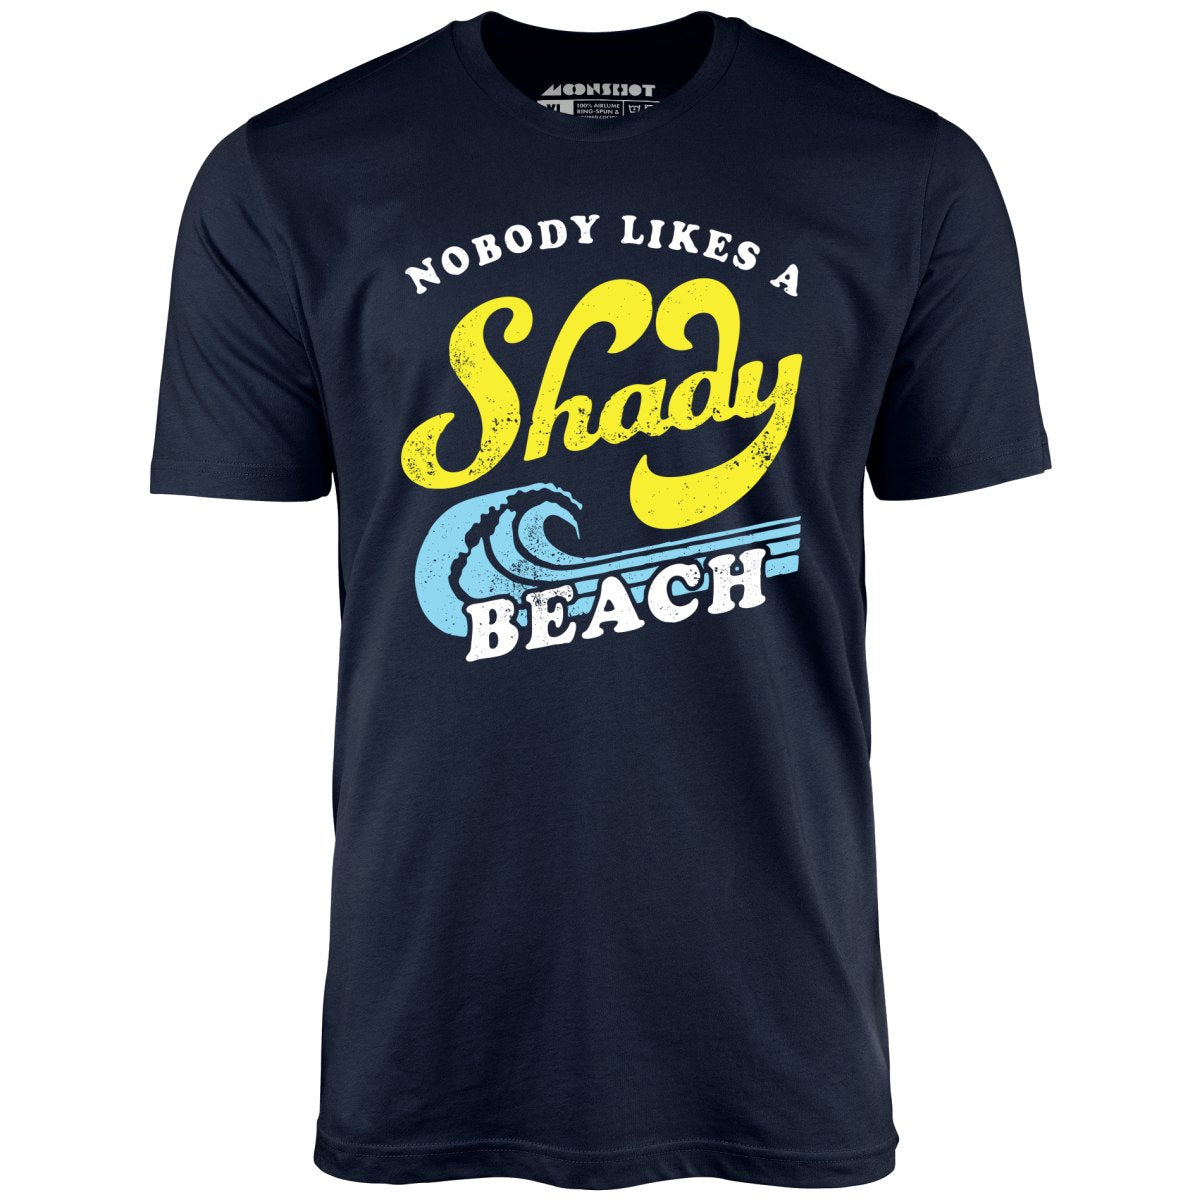 Nobody Likes a Shady Beach - Unisex T-Shirt